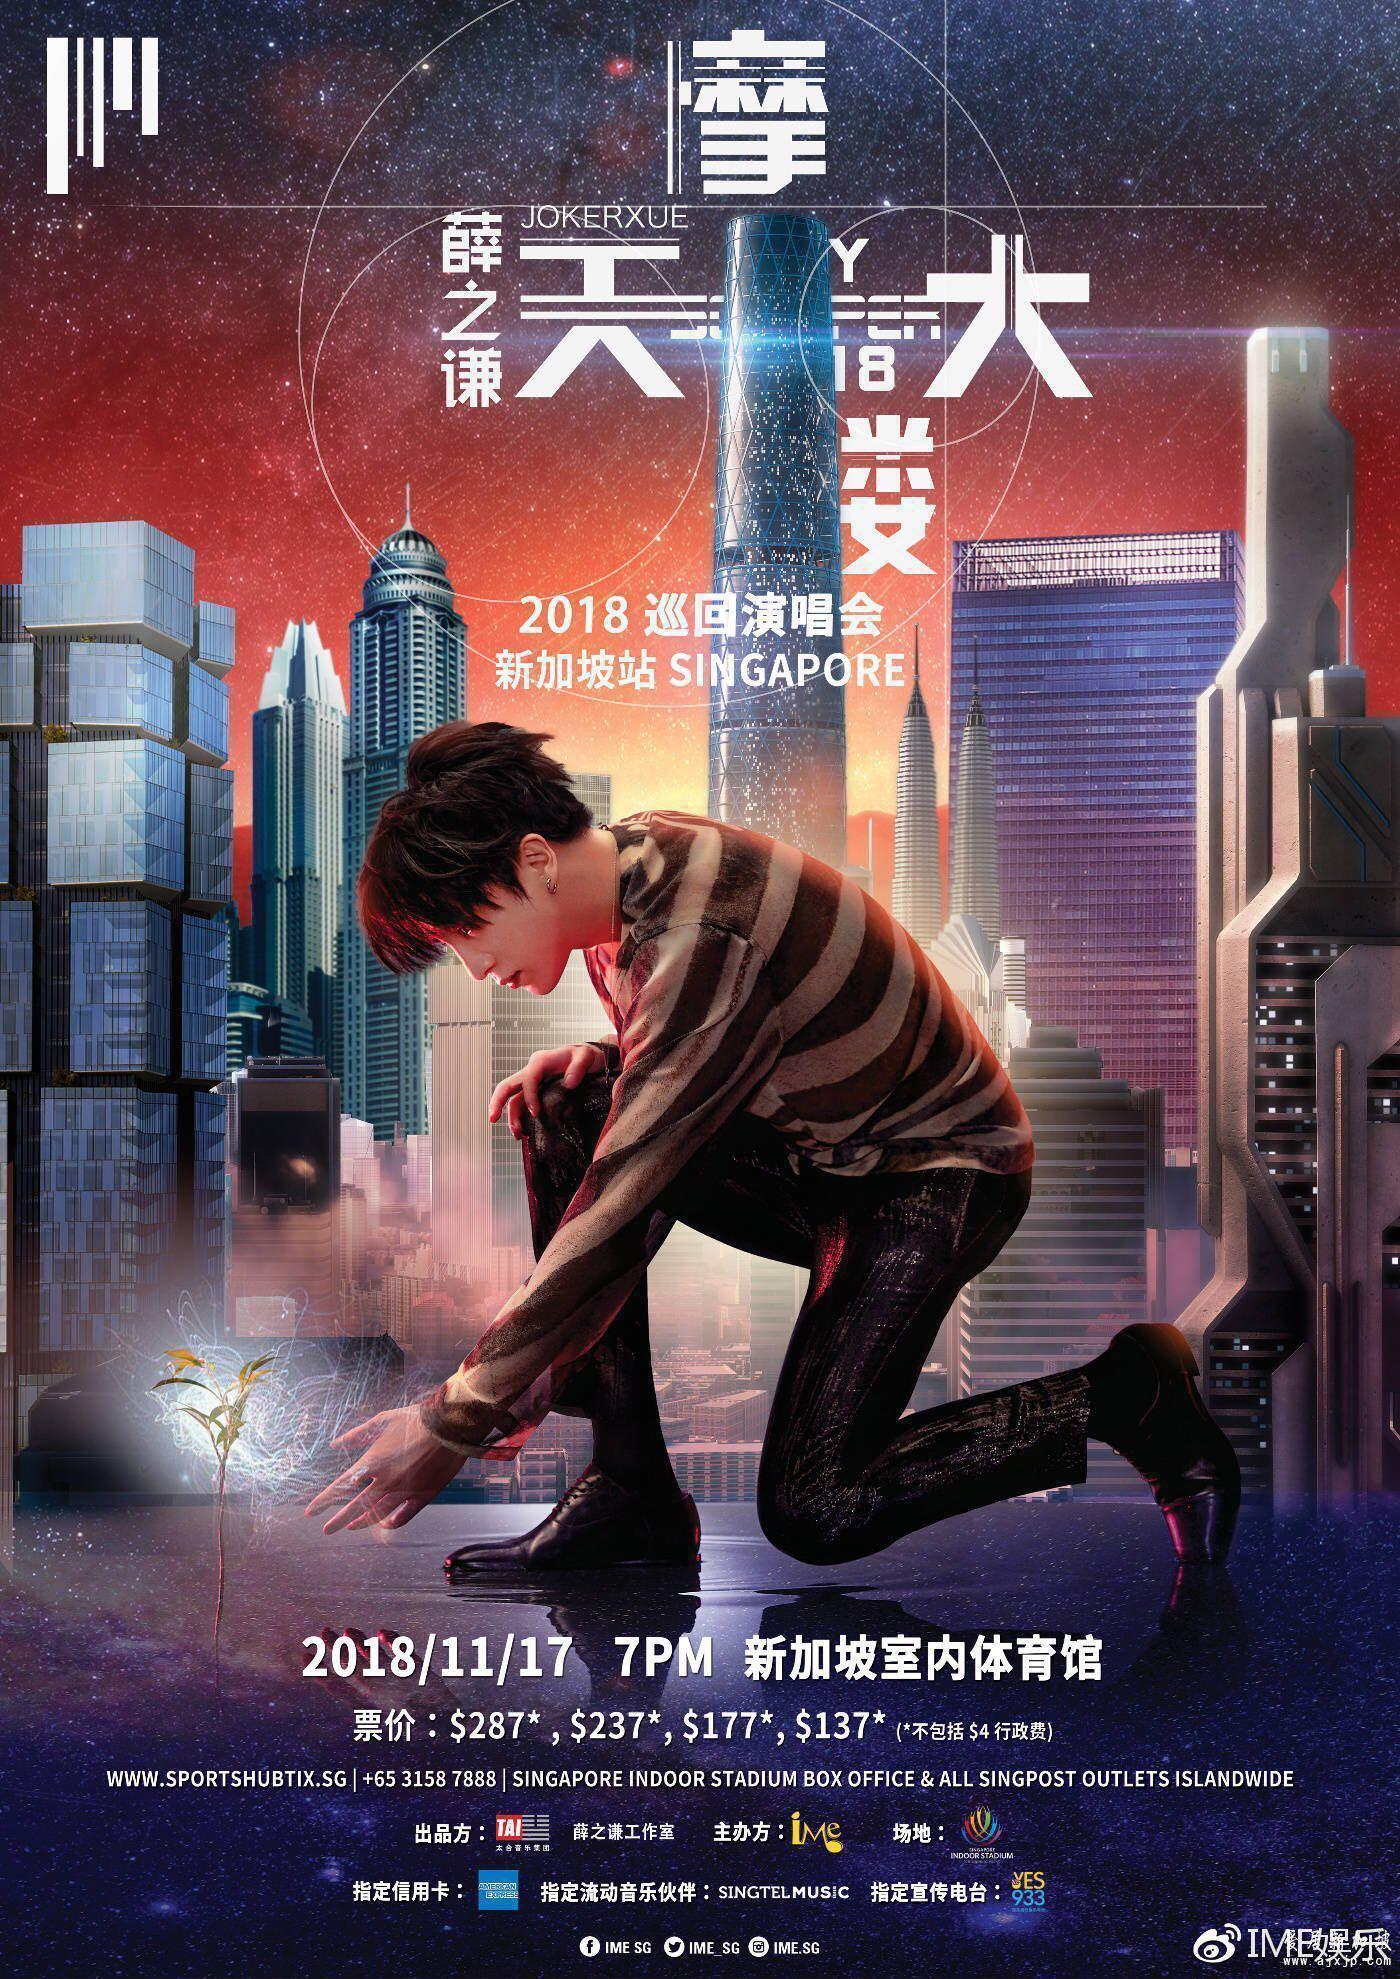 Joker Xue Concert Singapore 薛之谦摩天大楼演唱会新加坡 17th November, Tickets